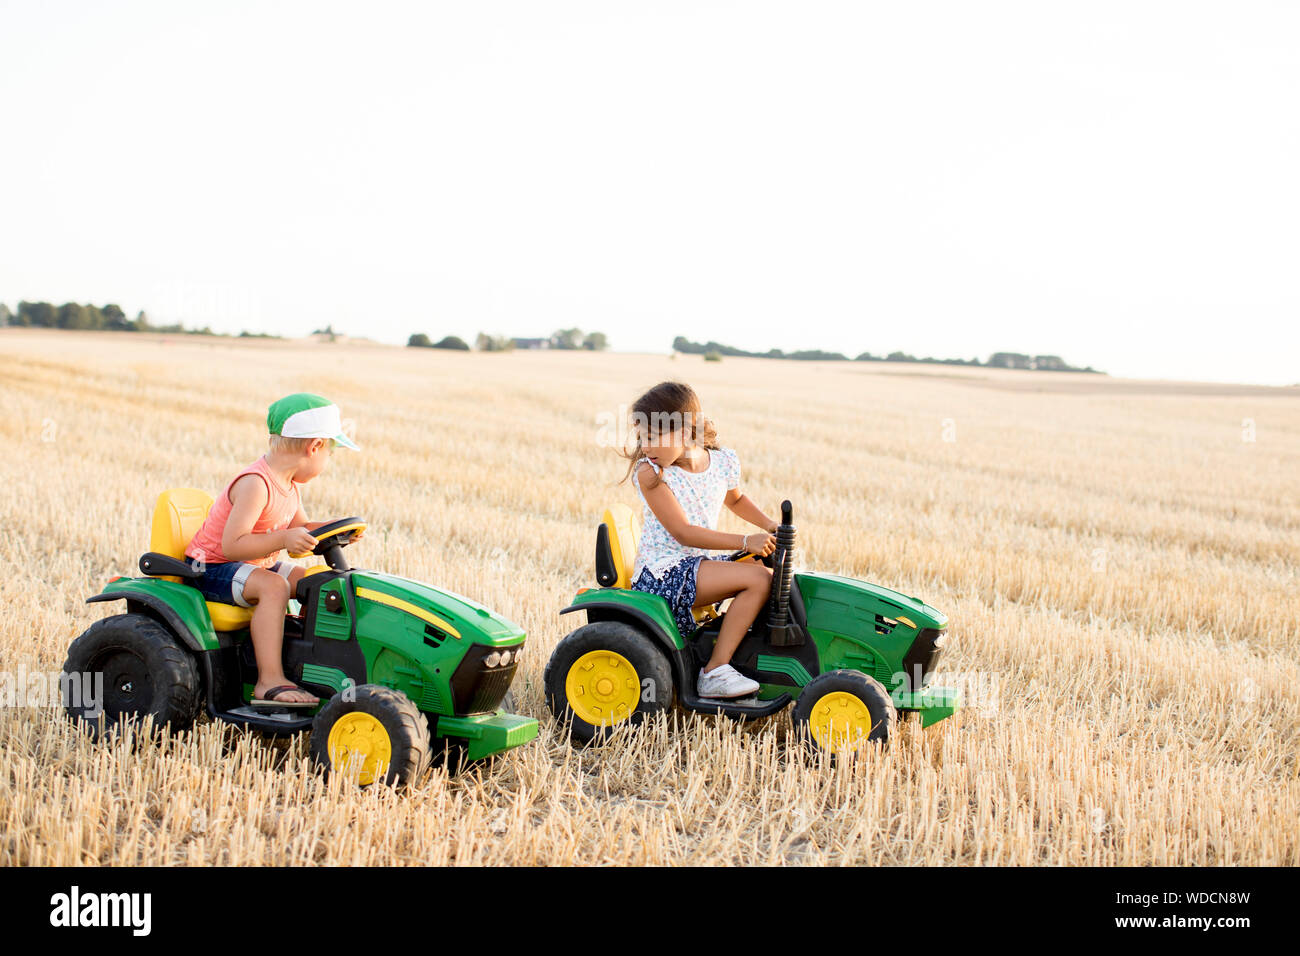 children's ride on toy tractors